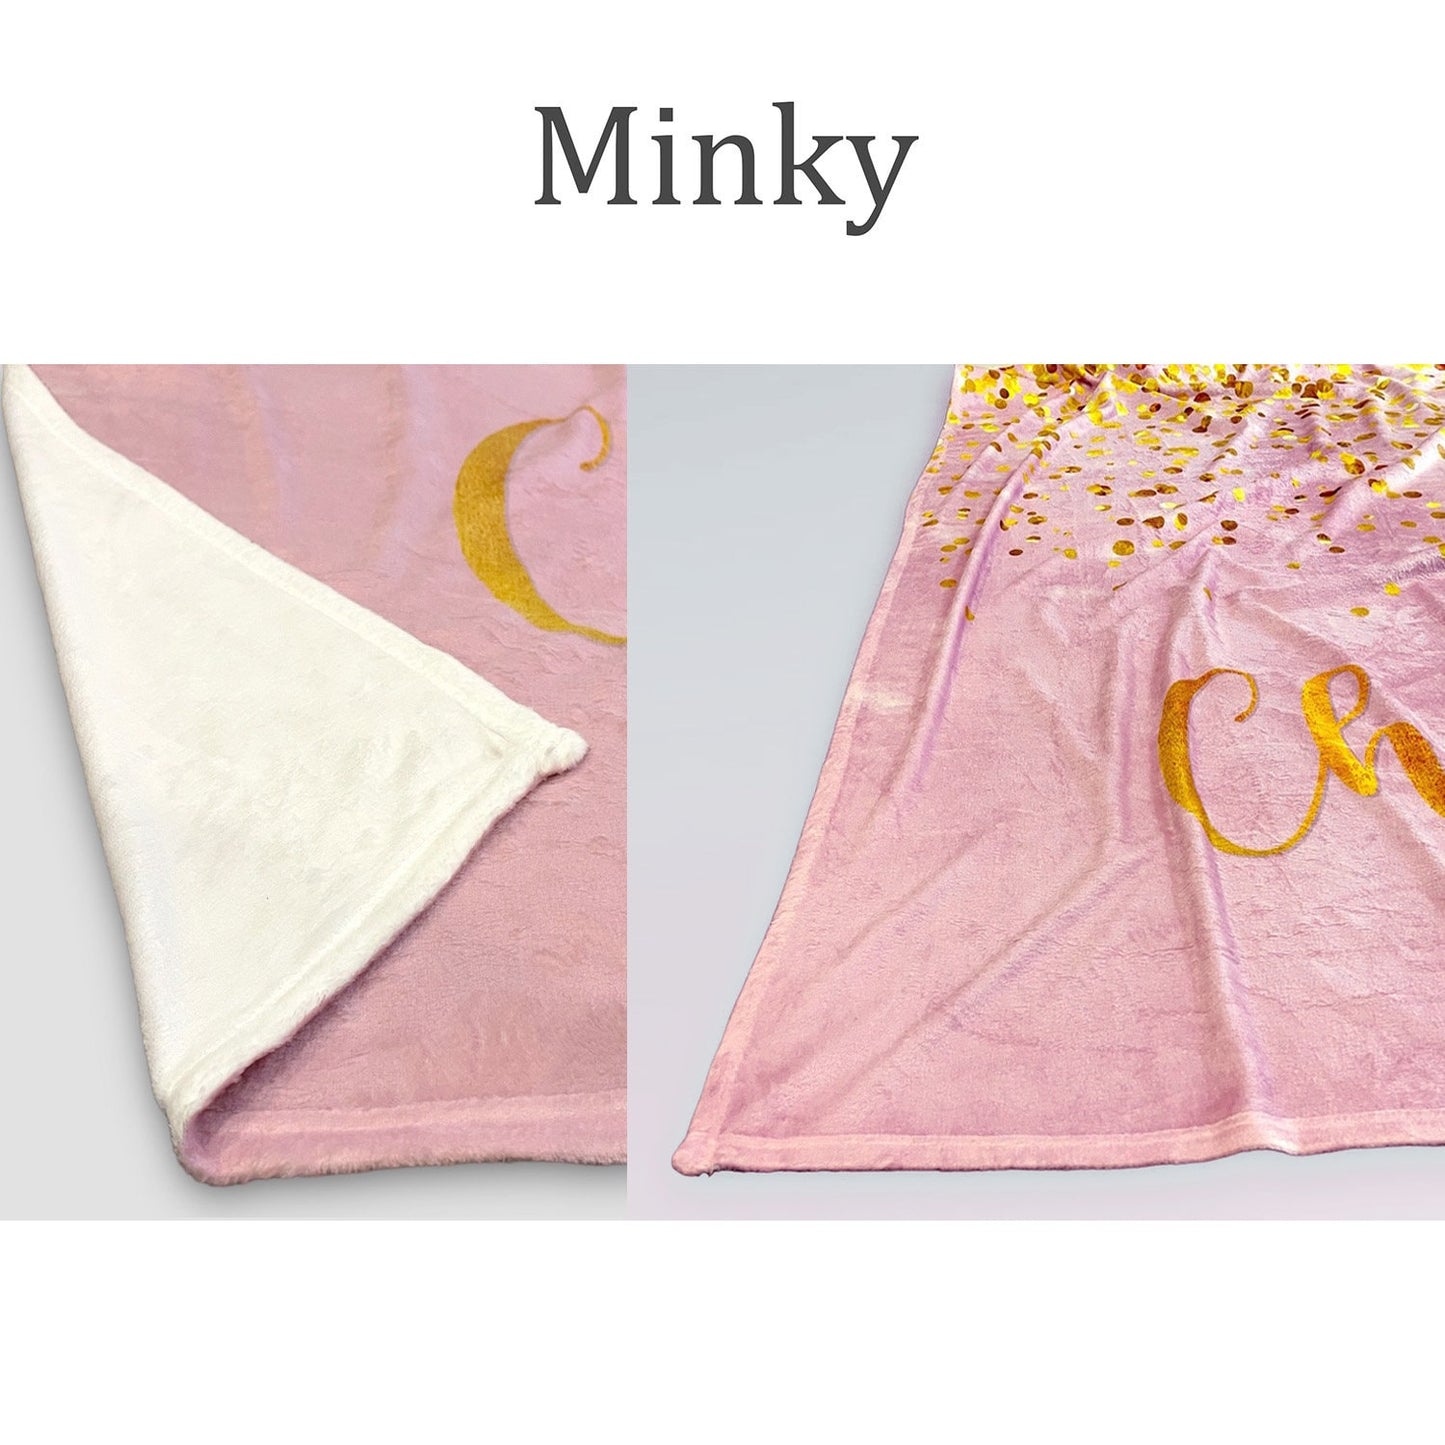 Custom Barbie font name personalize blanket, Minky or Sherpa custom blanket, Baby blanket, birthday gift idea